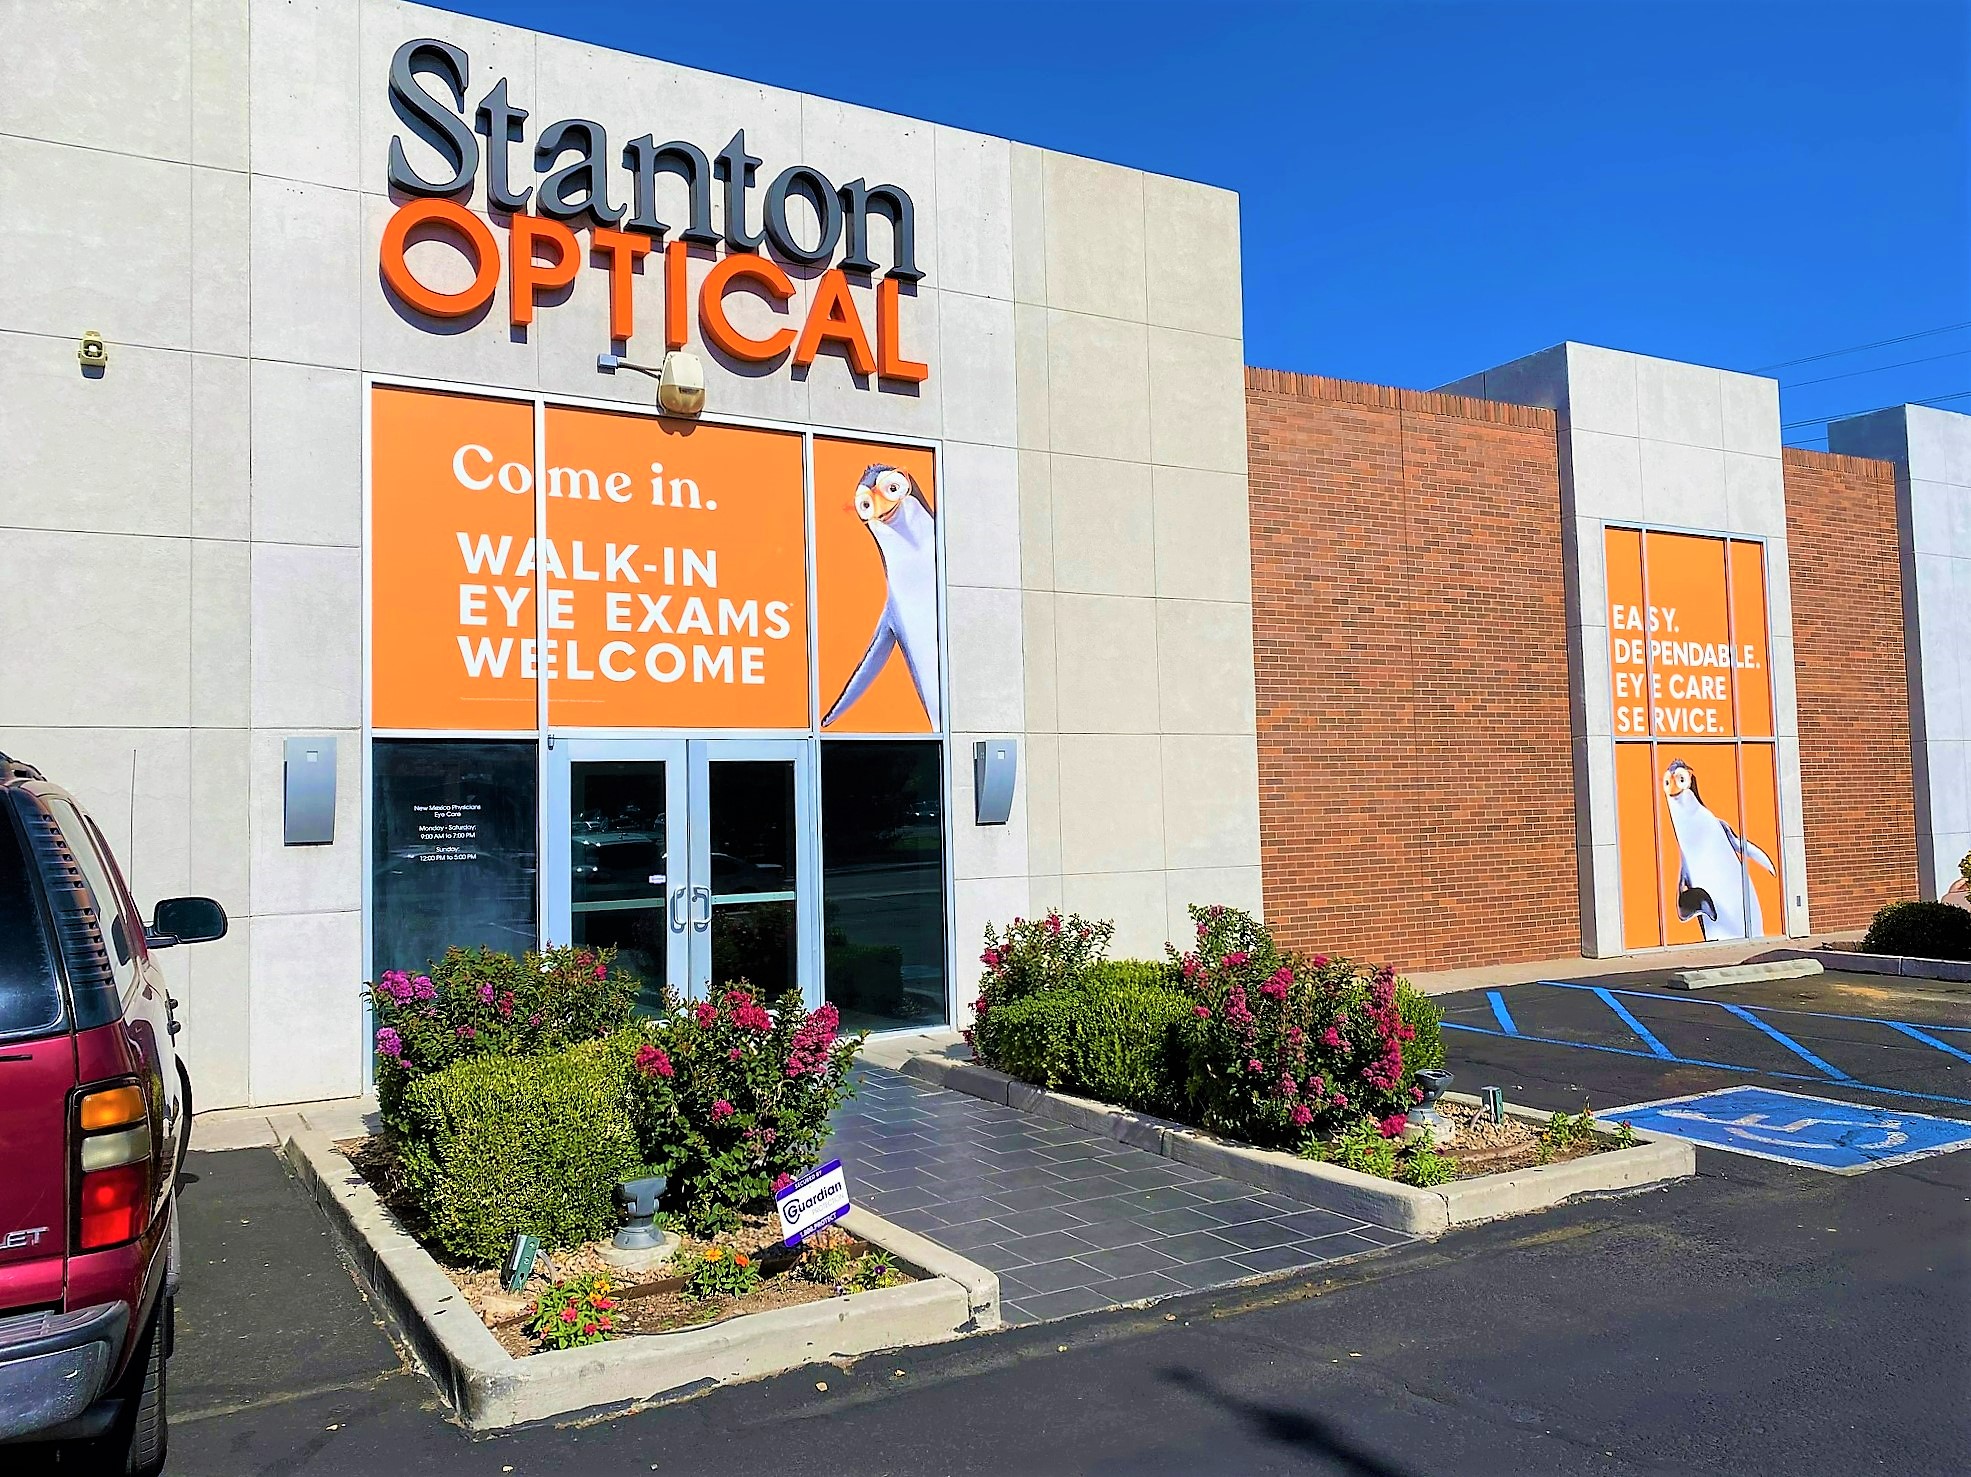 Storefront at Stanton Optical store in Albuquerque, NM 87110